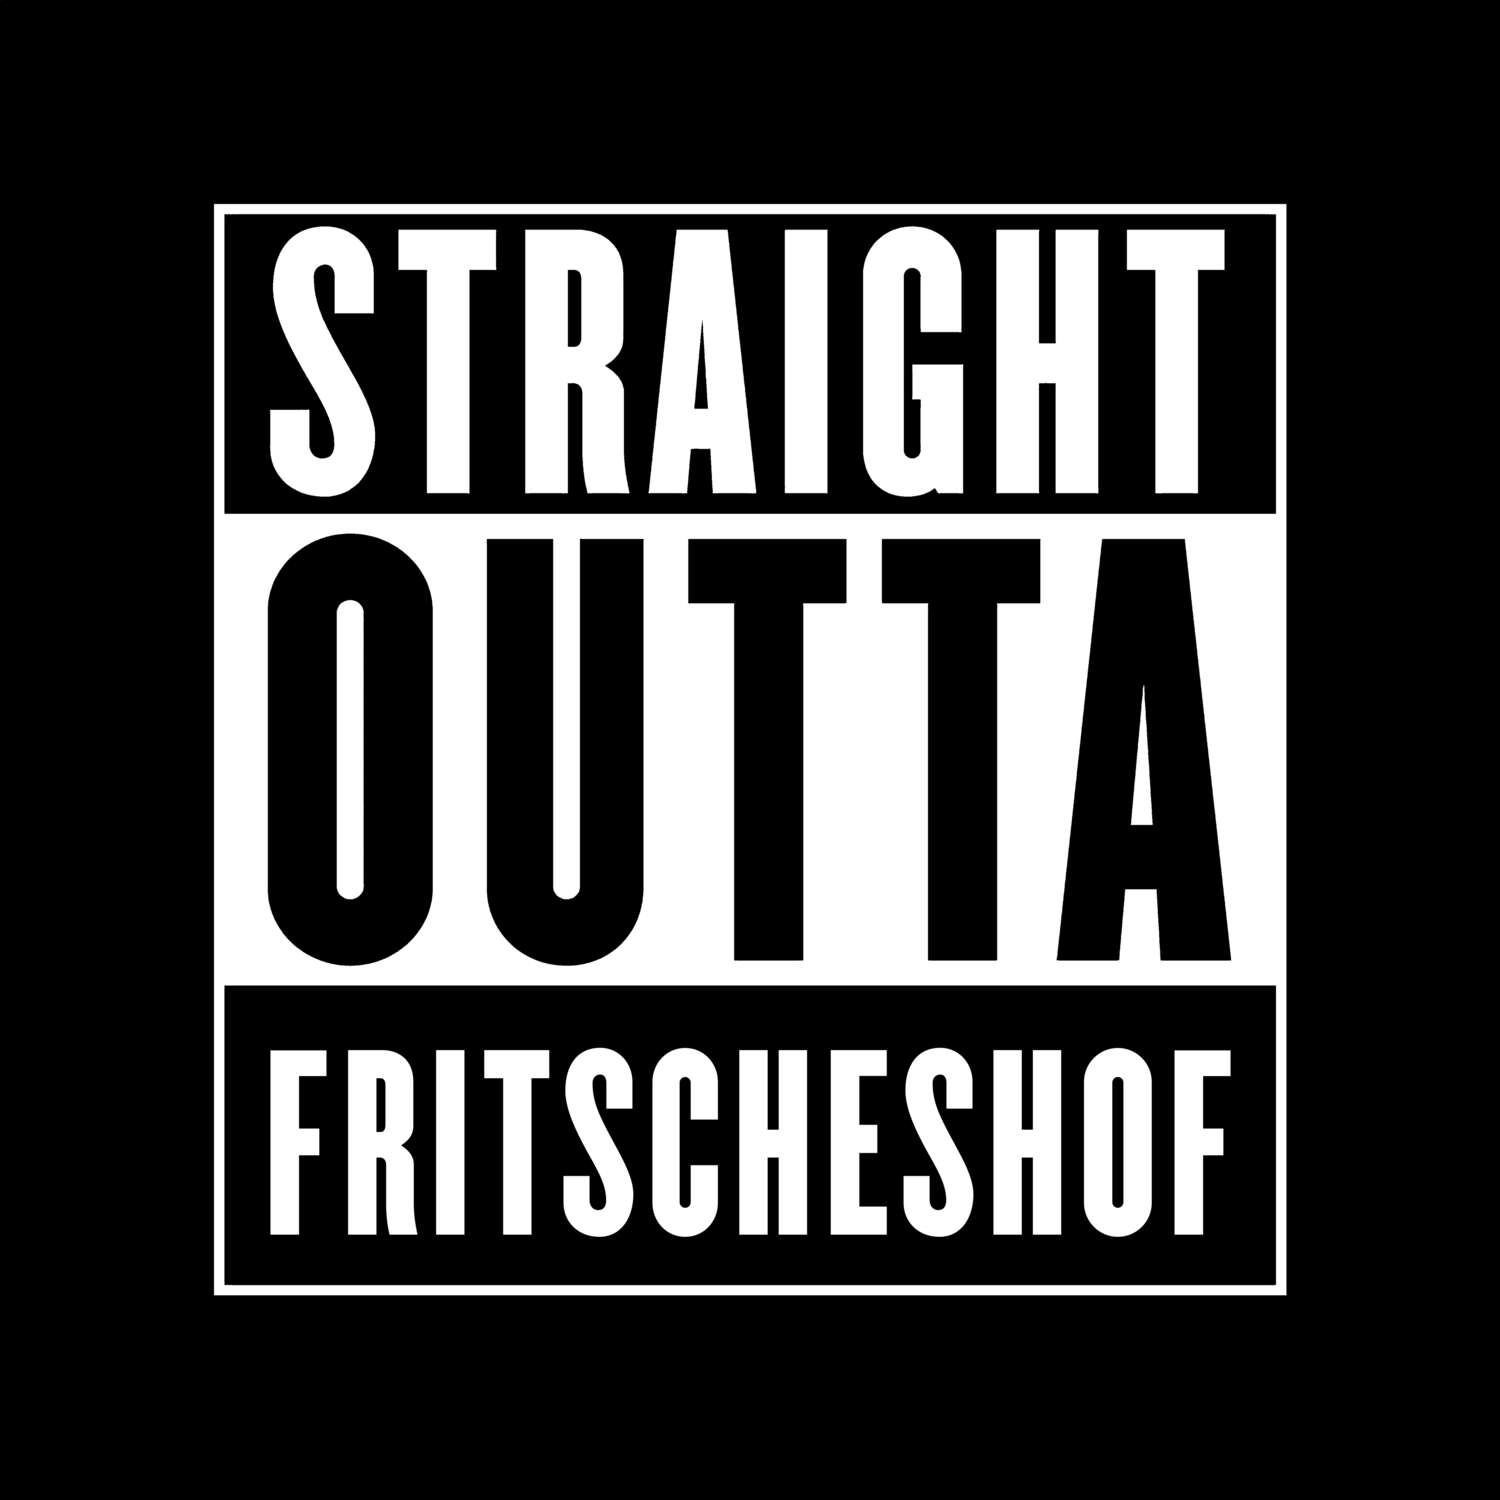 Fritscheshof T-Shirt »Straight Outta«